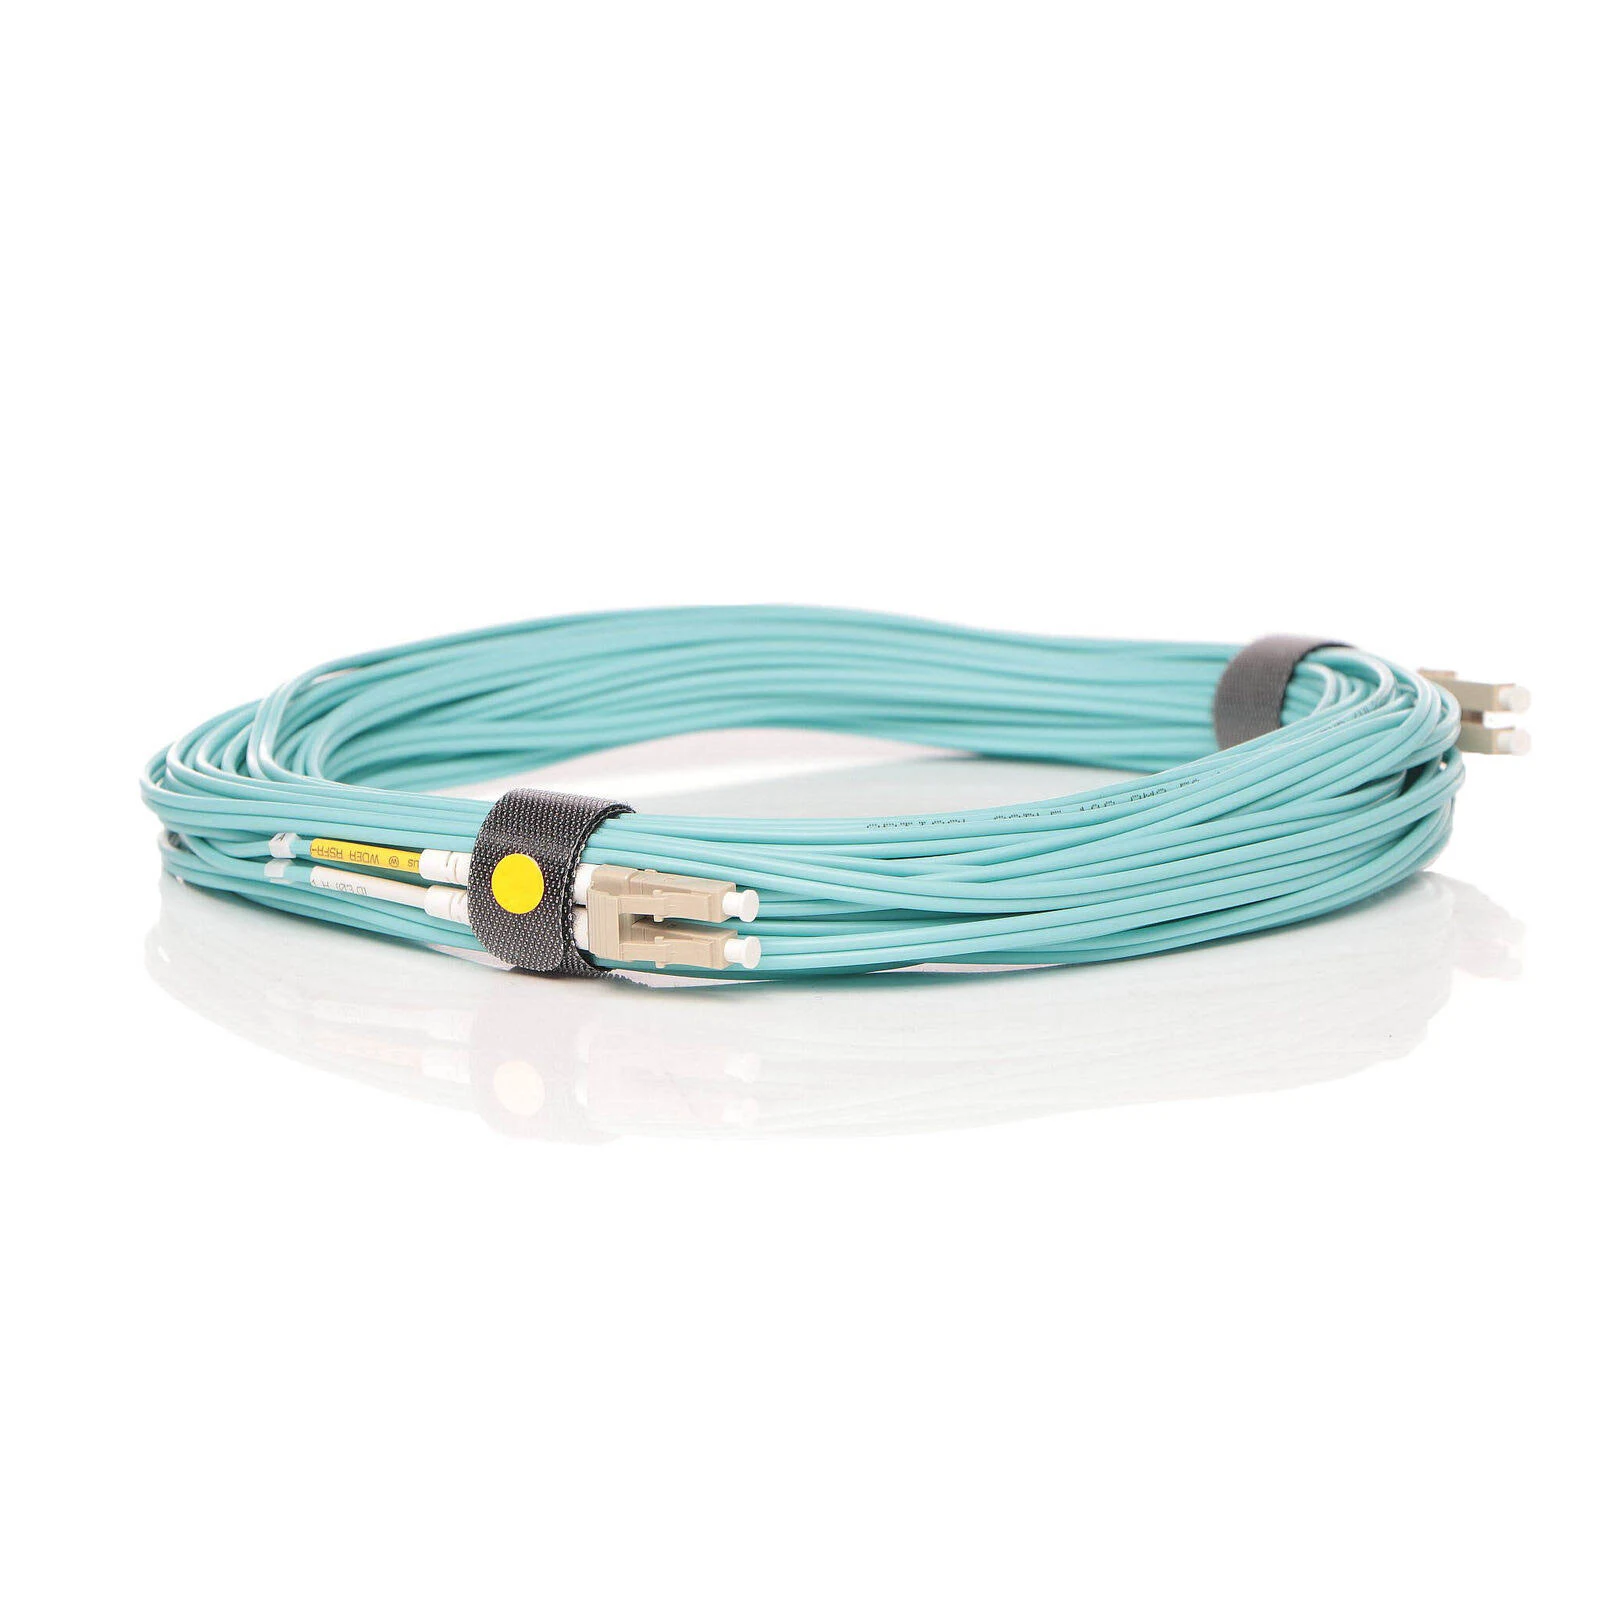 HPE Part  HPE Multimode OM3 LC/LC Fiber Optic cable, 15m (49.2ft) long - Duplex zipcord graded index 50/125um multimode fiber optic cable with LC connectors on each end (Aqua Color) - Optical performance: 2000MHz/km